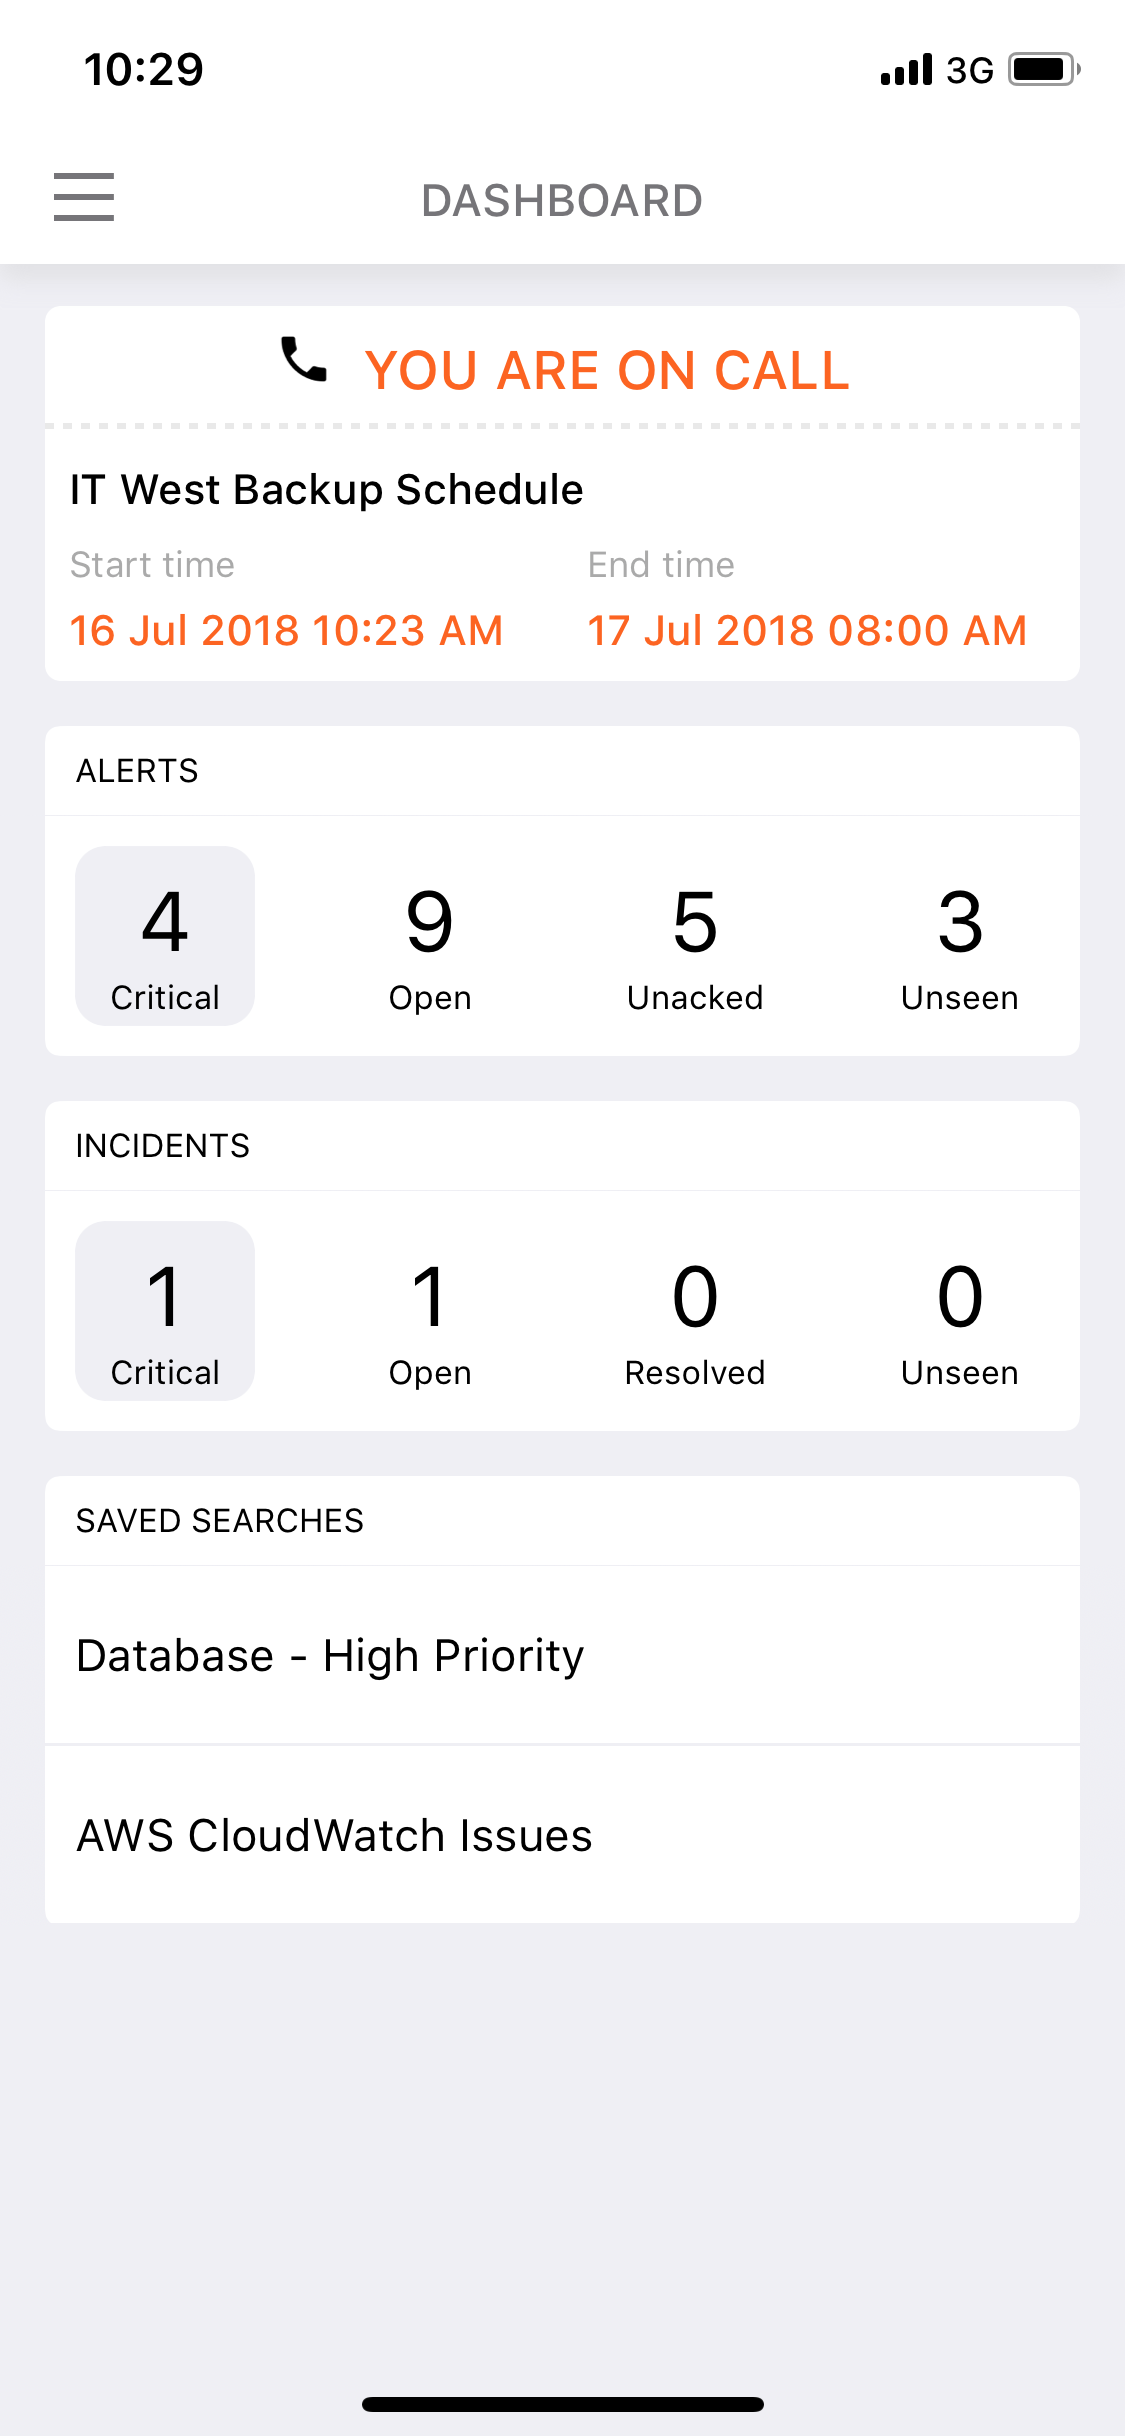 View the iOS dashboard, Opsgenie app for iOS Cloud